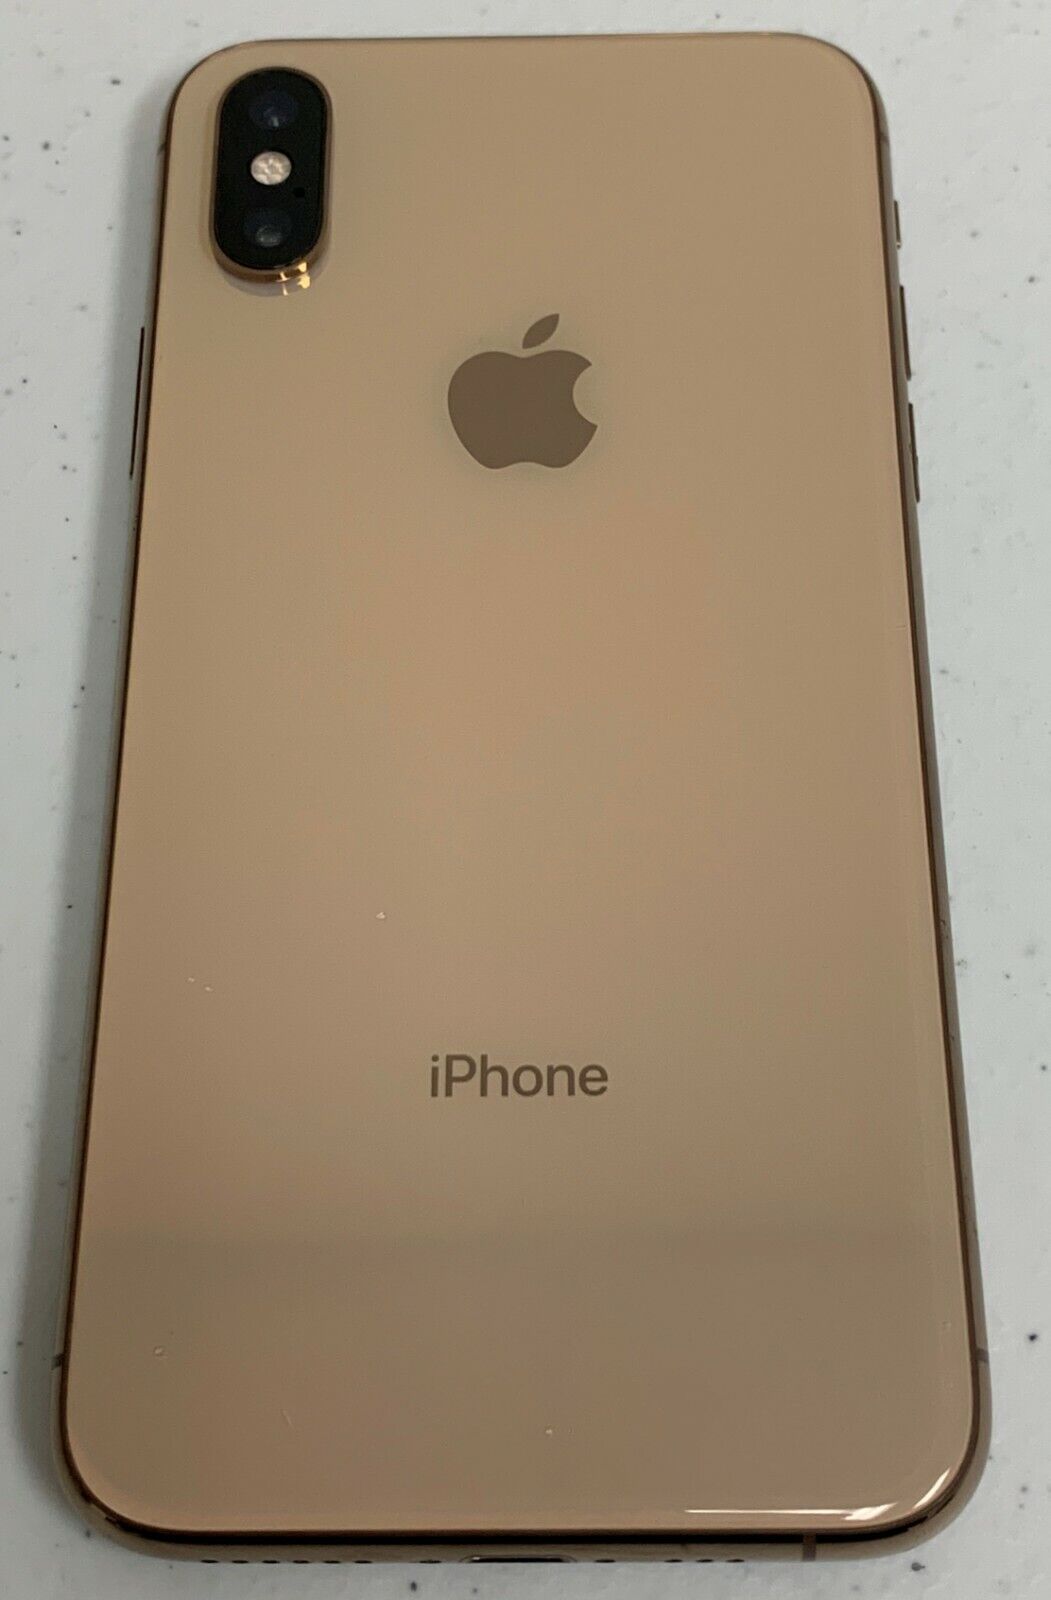 Apple iPhone XS - 64GB - Gold (Verizon) A1920 (CDMA + GSM) | eBay